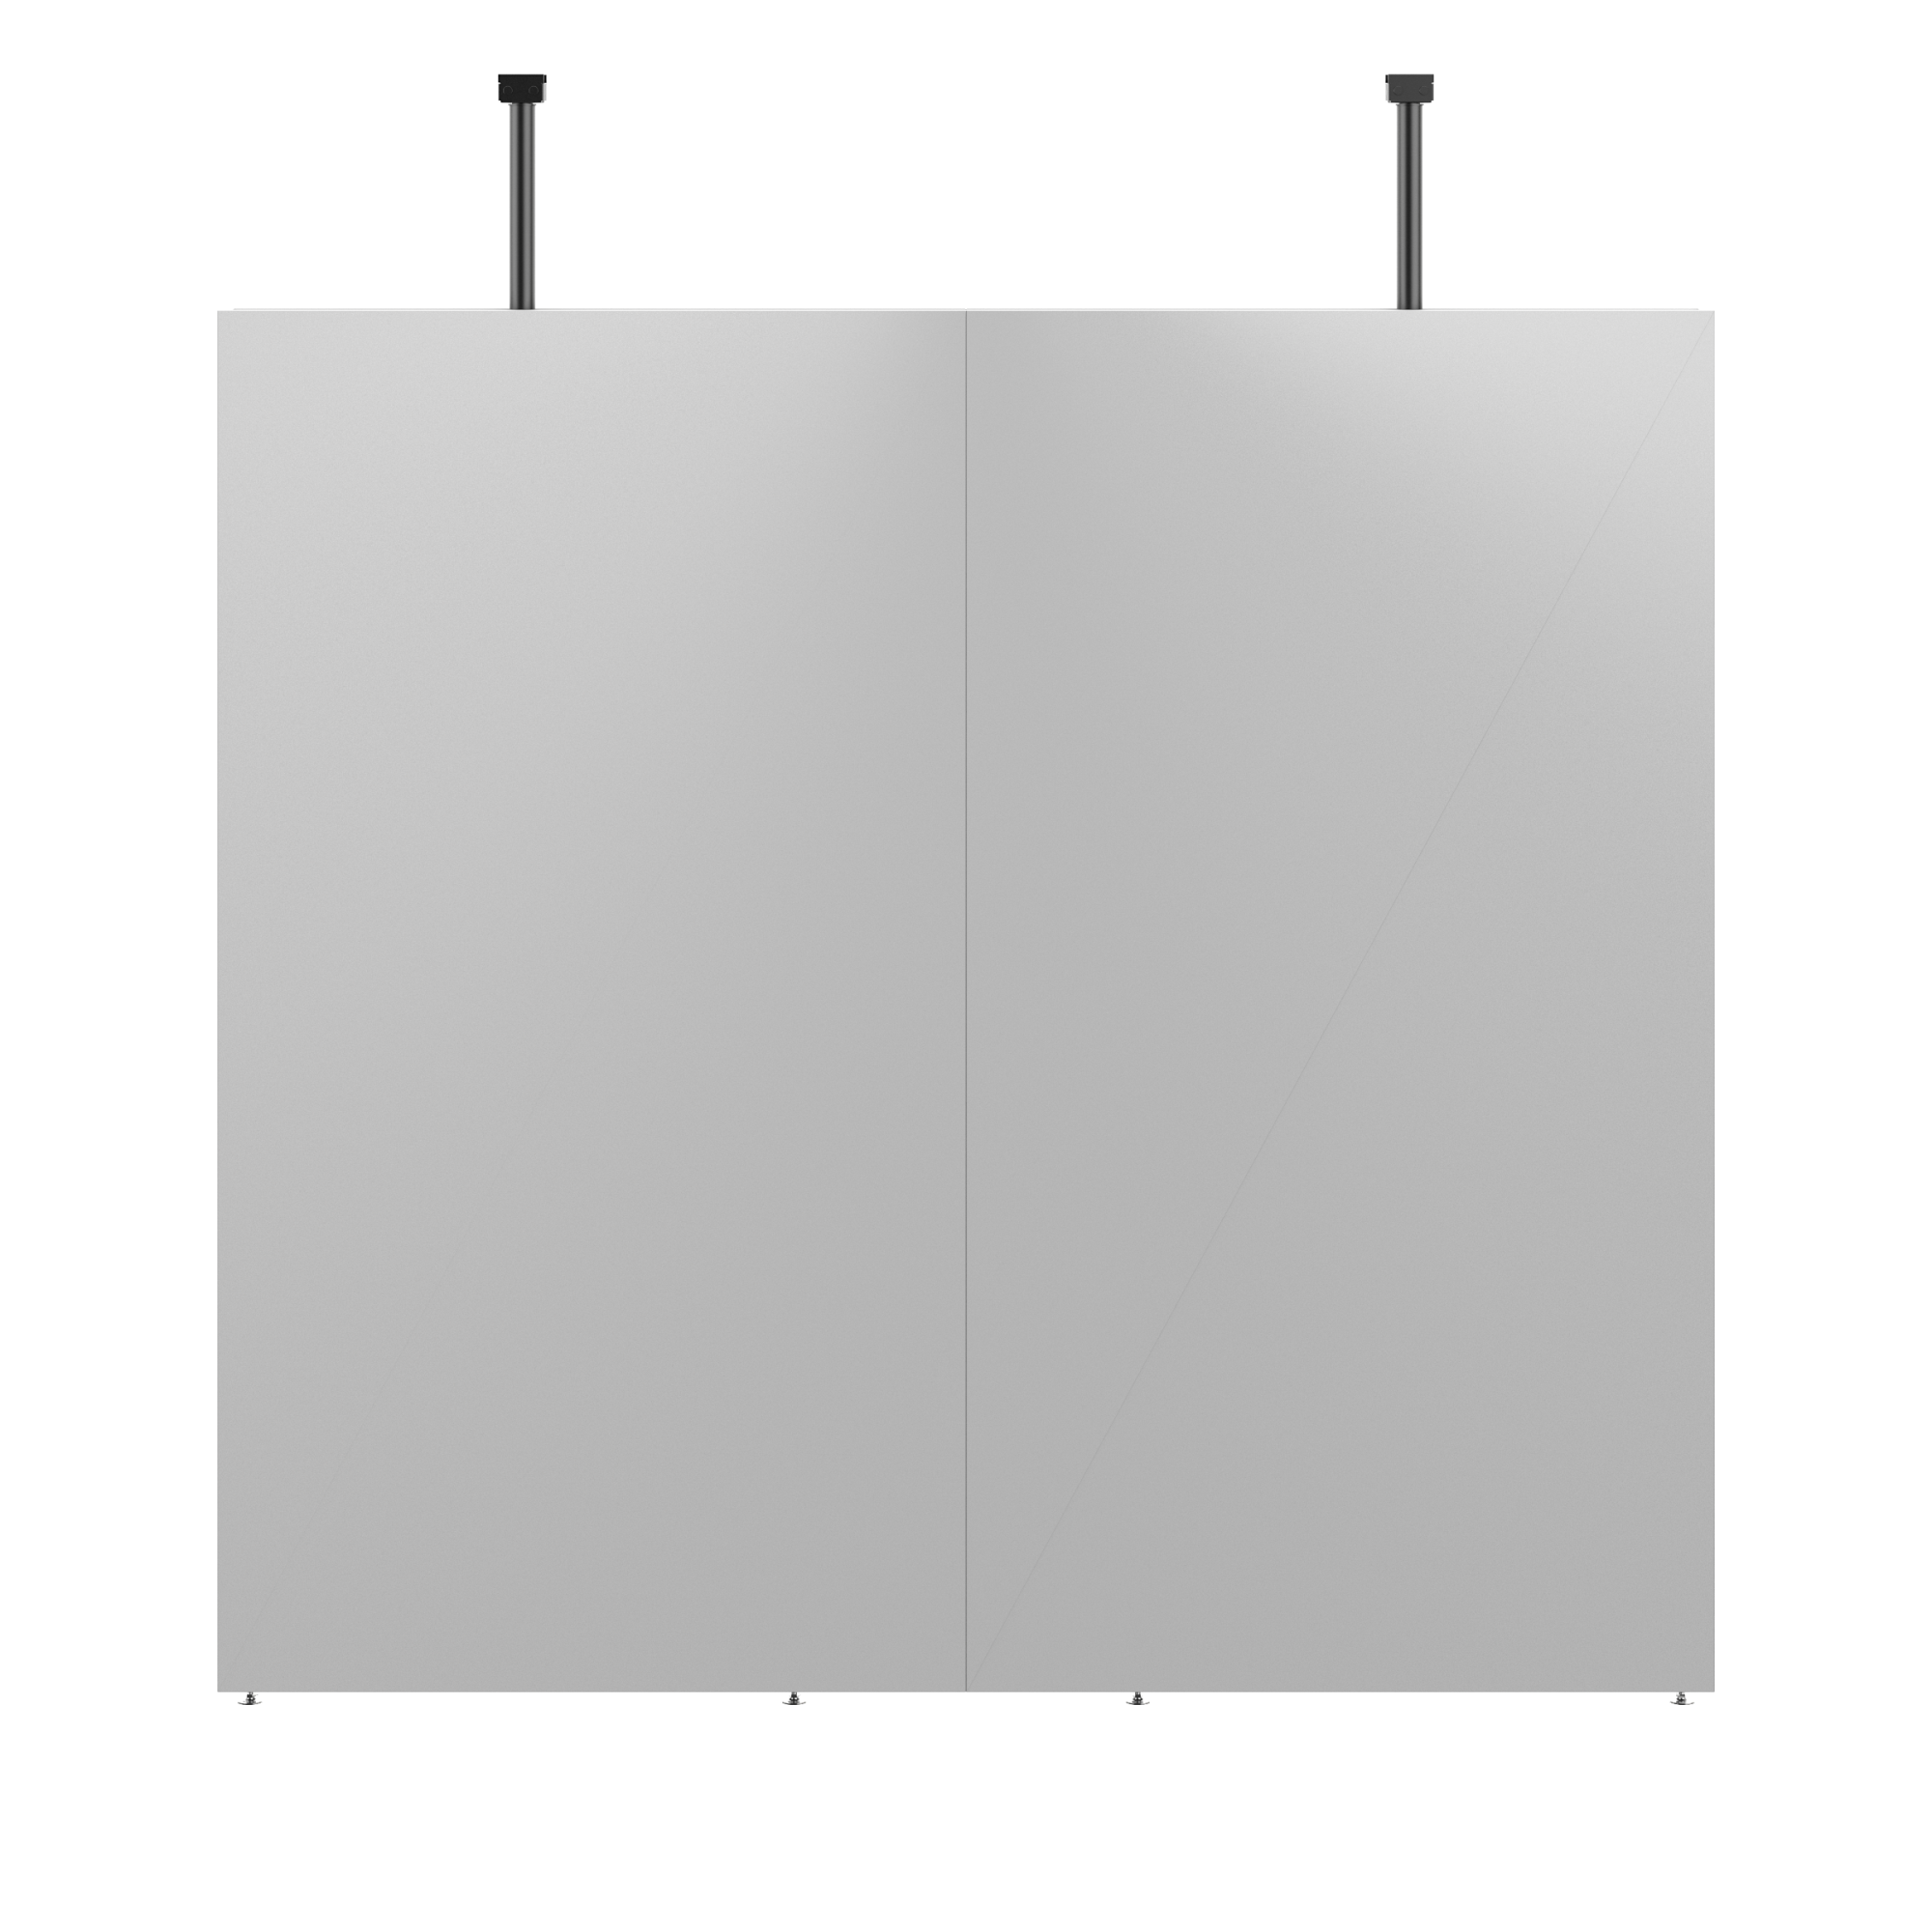 Produktbild (Wand ohne System – mit Klemmadapter, ohne Elektrifizierung)